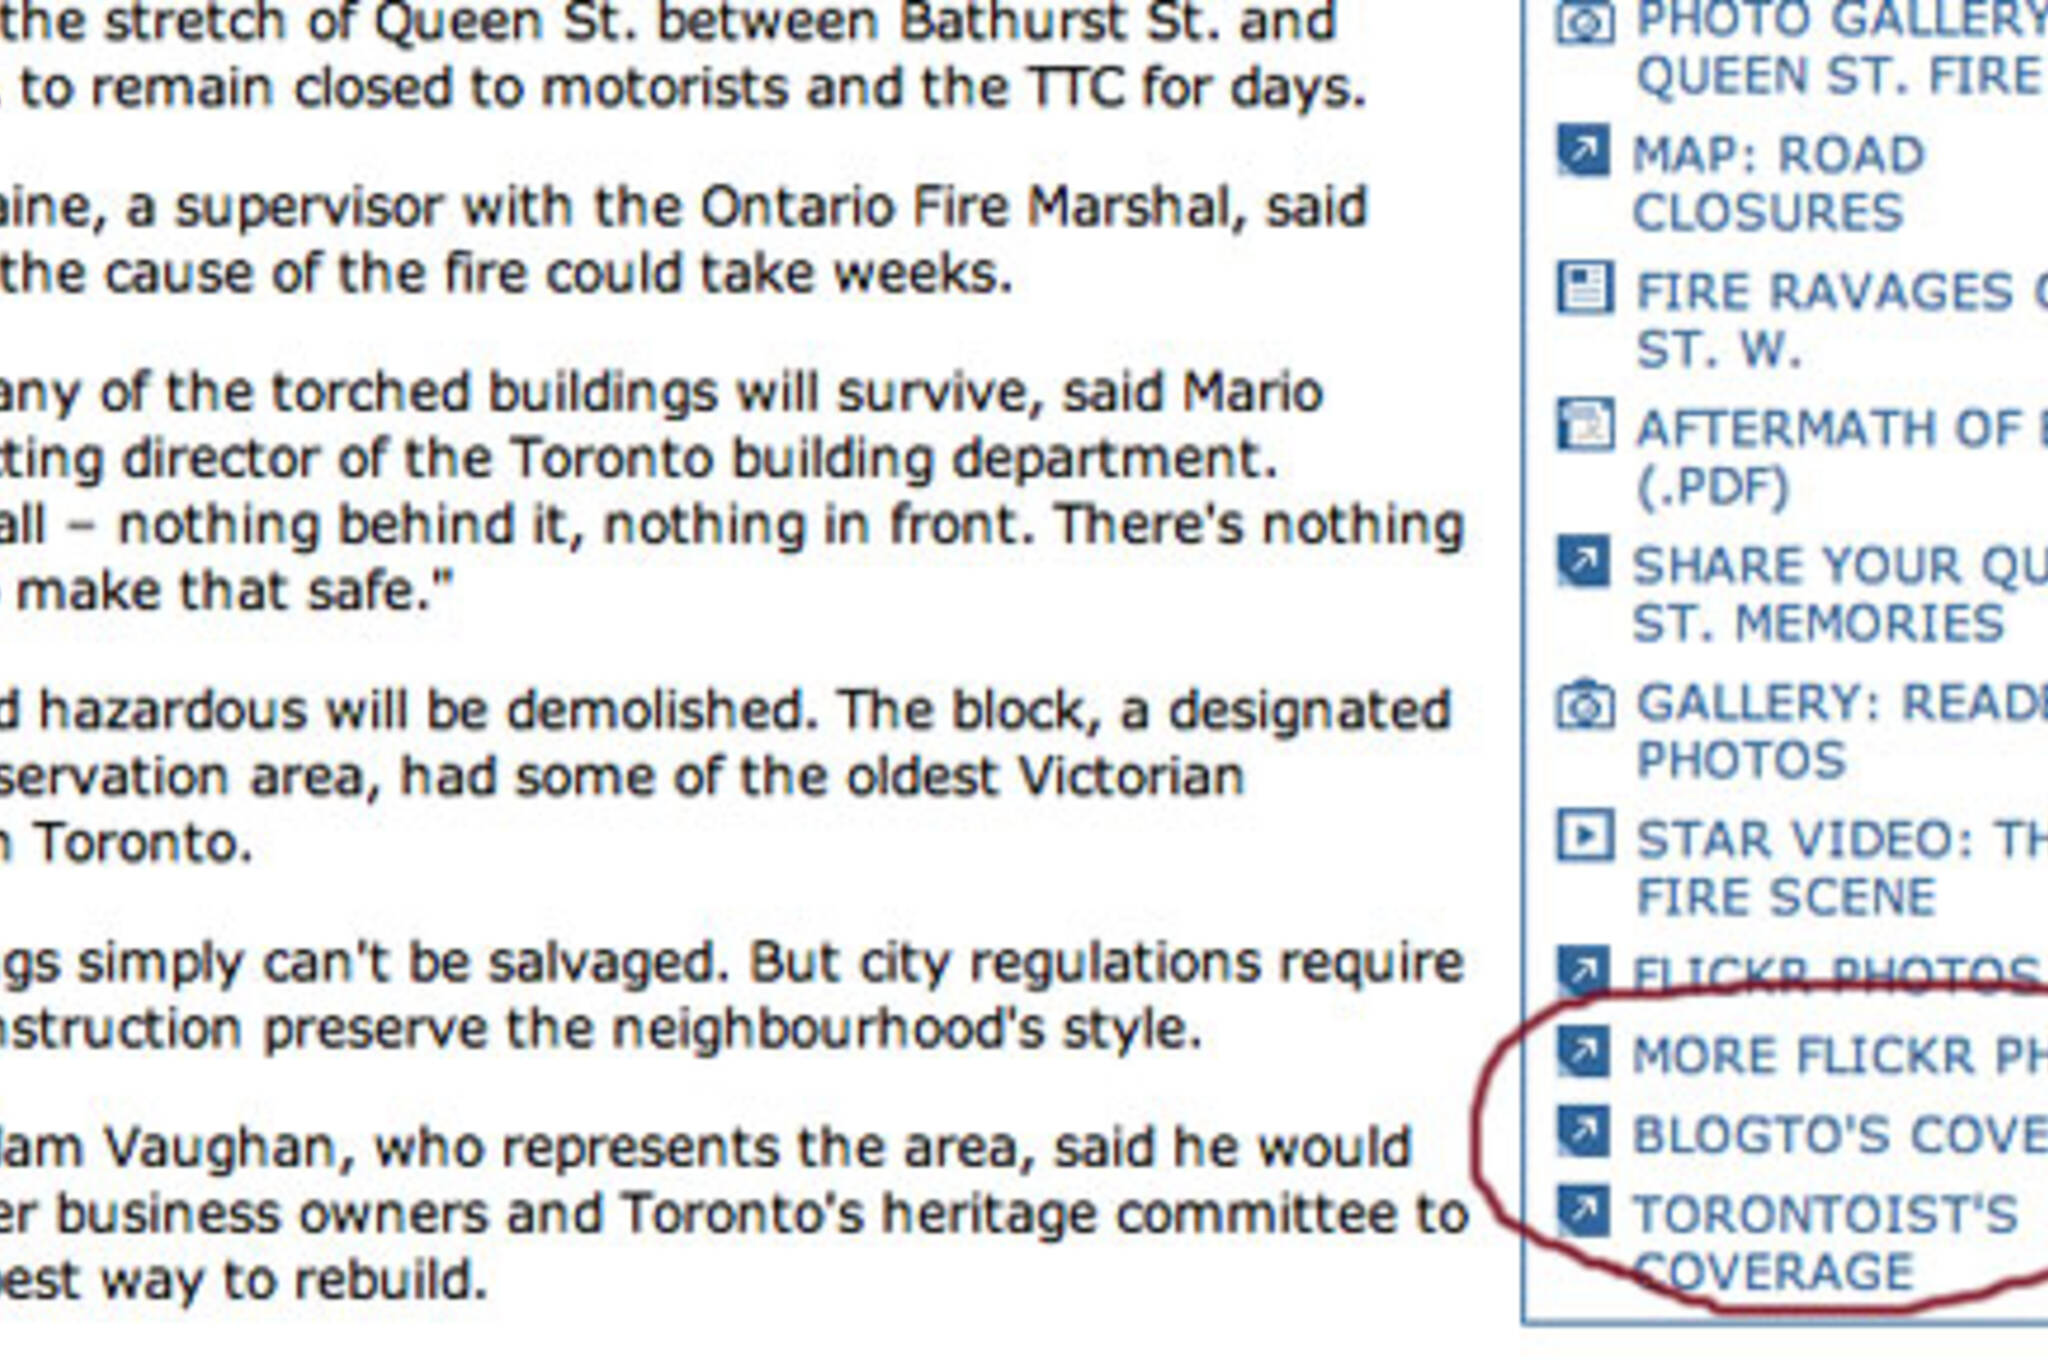 Toronto Star linking to blogTO and Torontoist